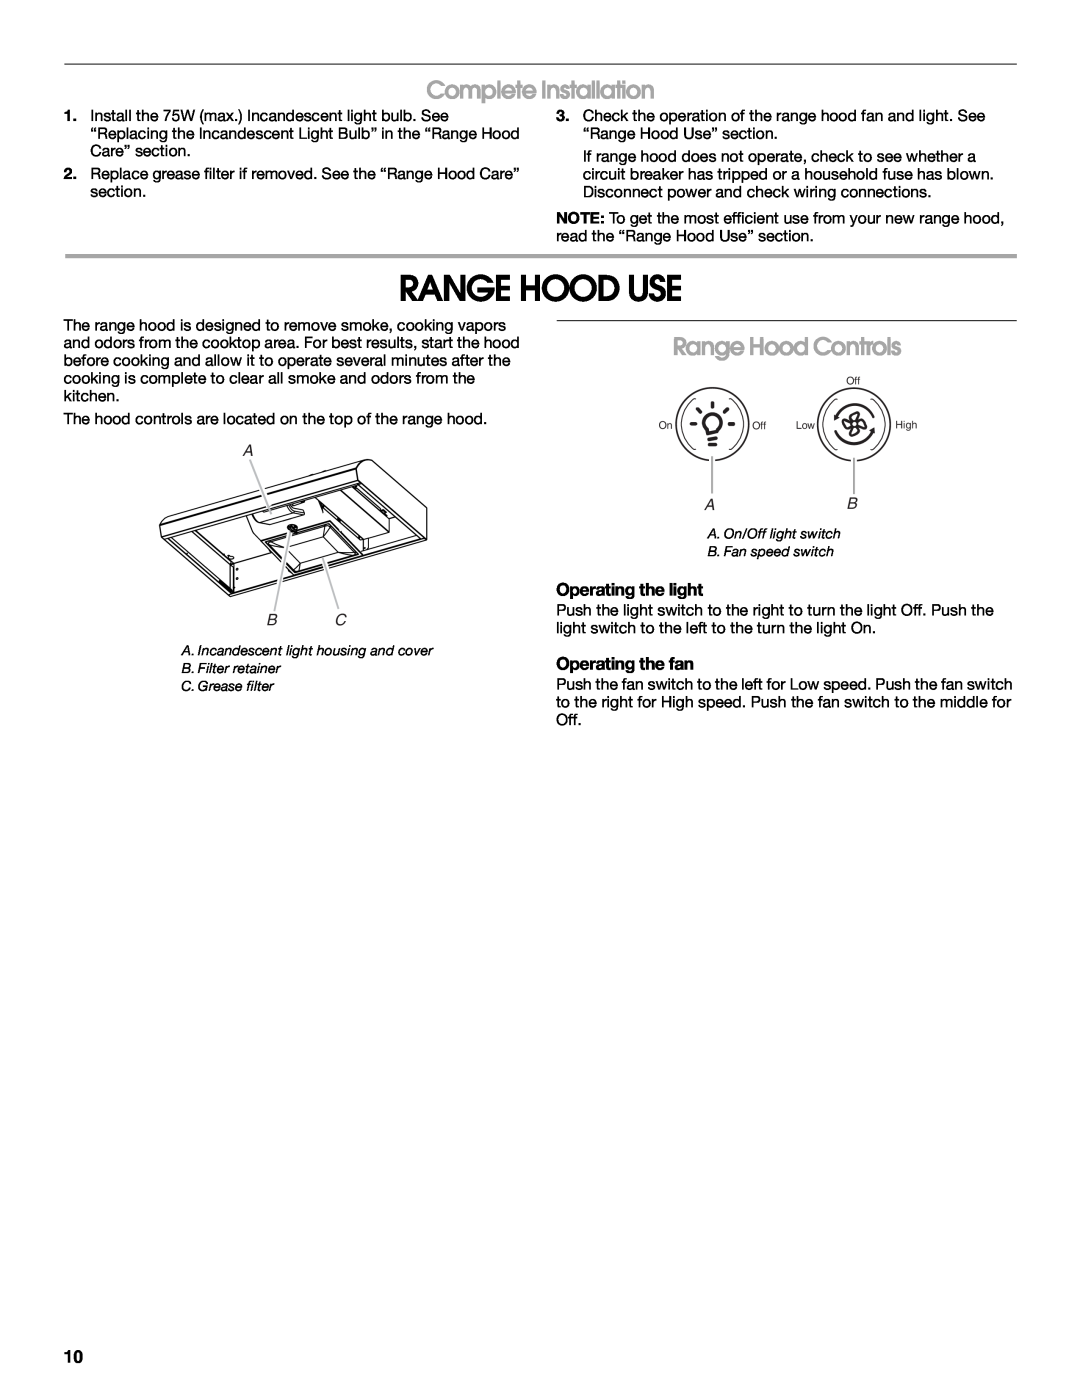 Whirlpool LI3Z2A Range Hood Use, Complete Installation, Range Hood Controls, Operating the light, Operating the fan, A Bc 